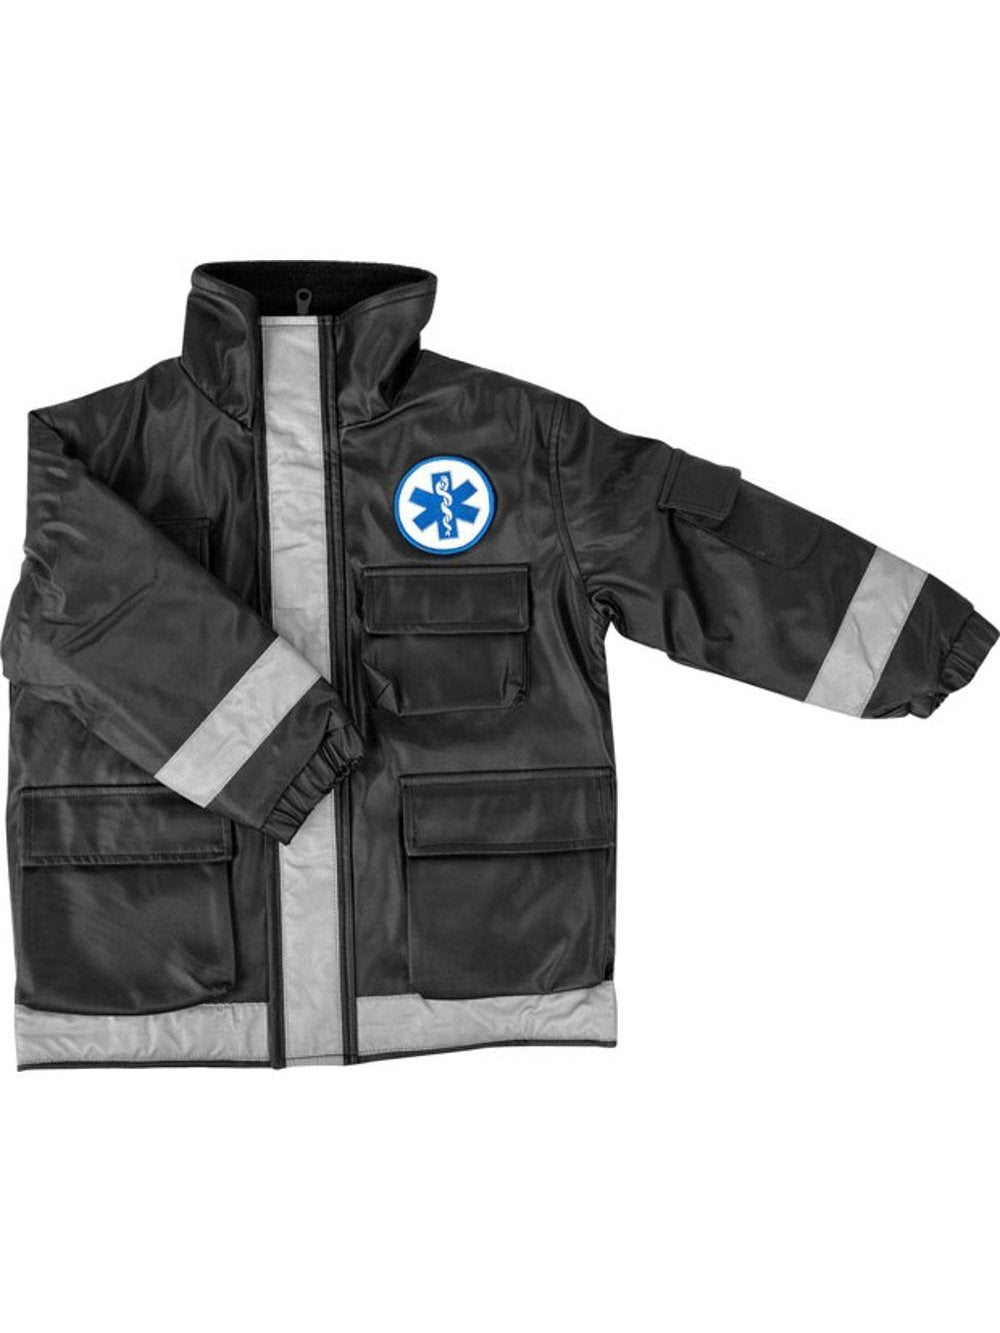 Child Black Paramedic Jacket-COSTUMEISH